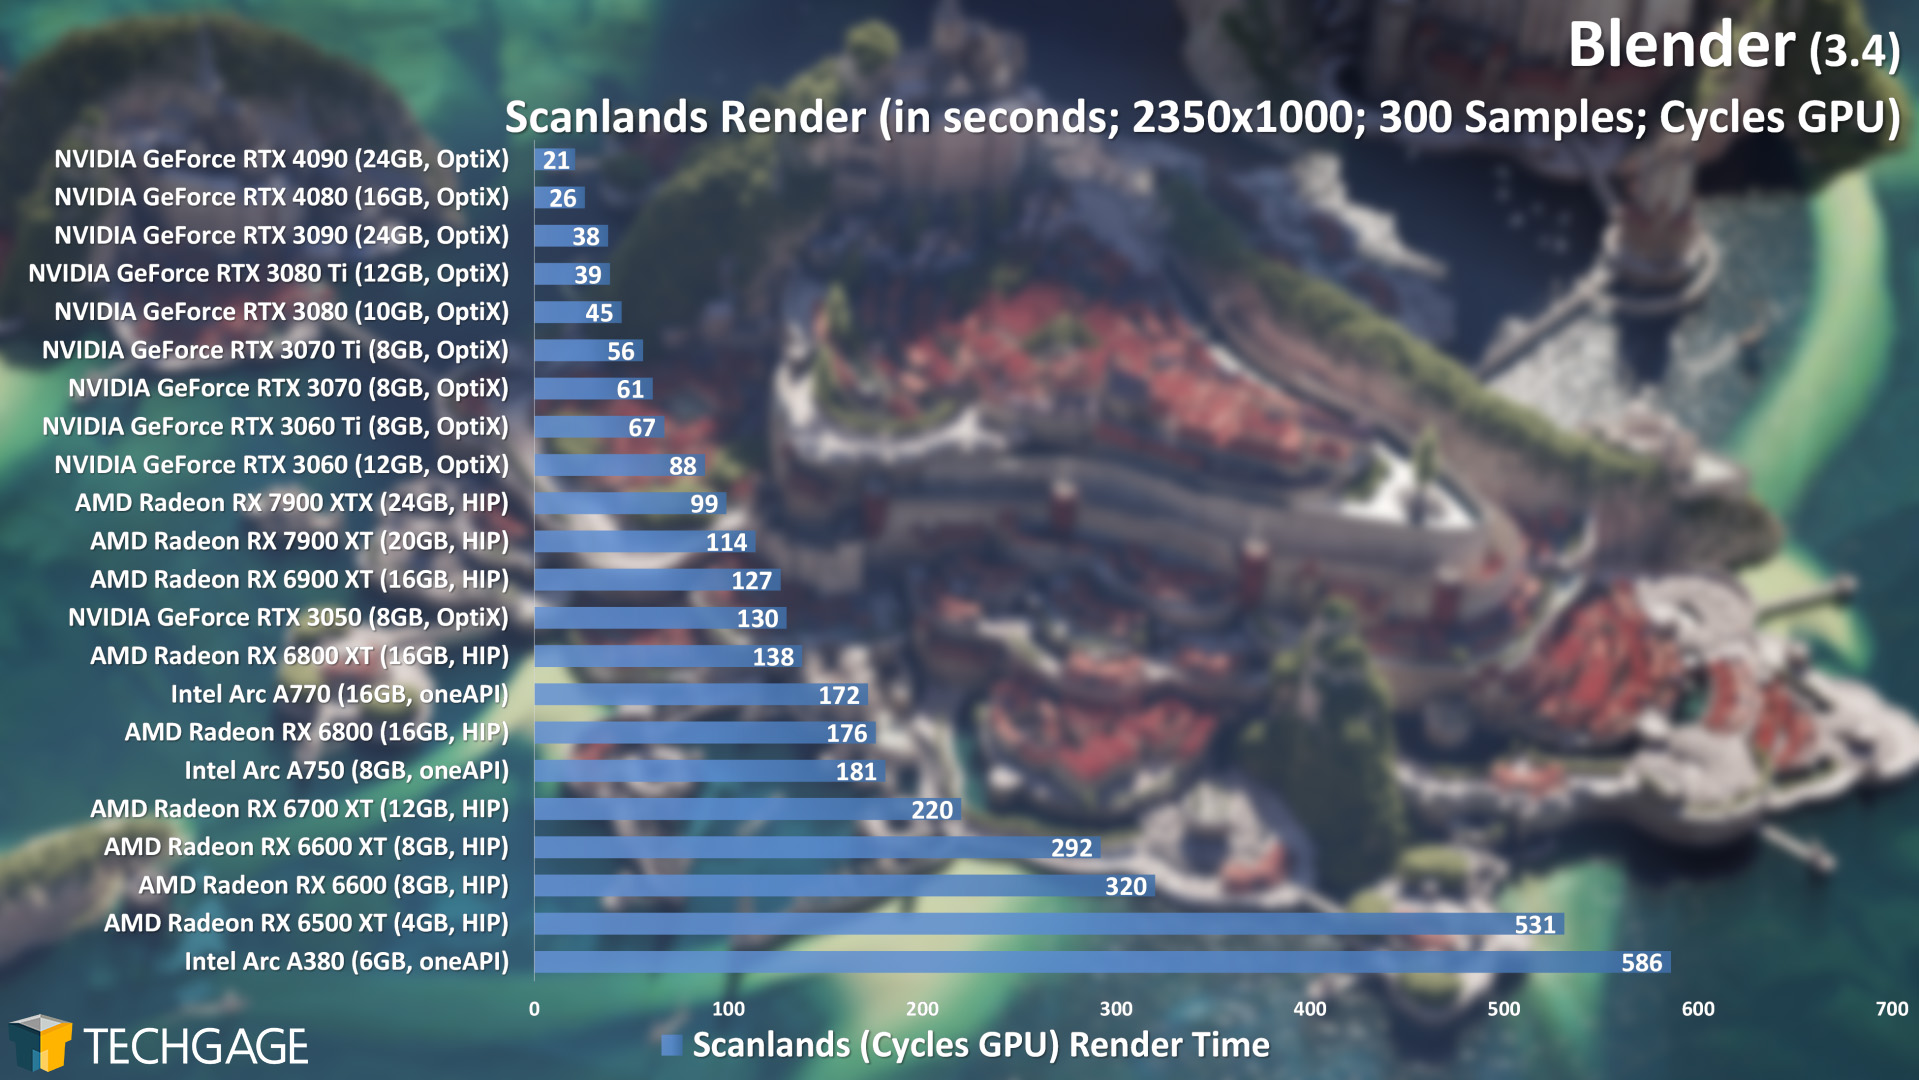 Blender 3.4 - Cycles GPU Render Performance (Scanlands) (AMD Radeon RX 7900 XT and XTX)